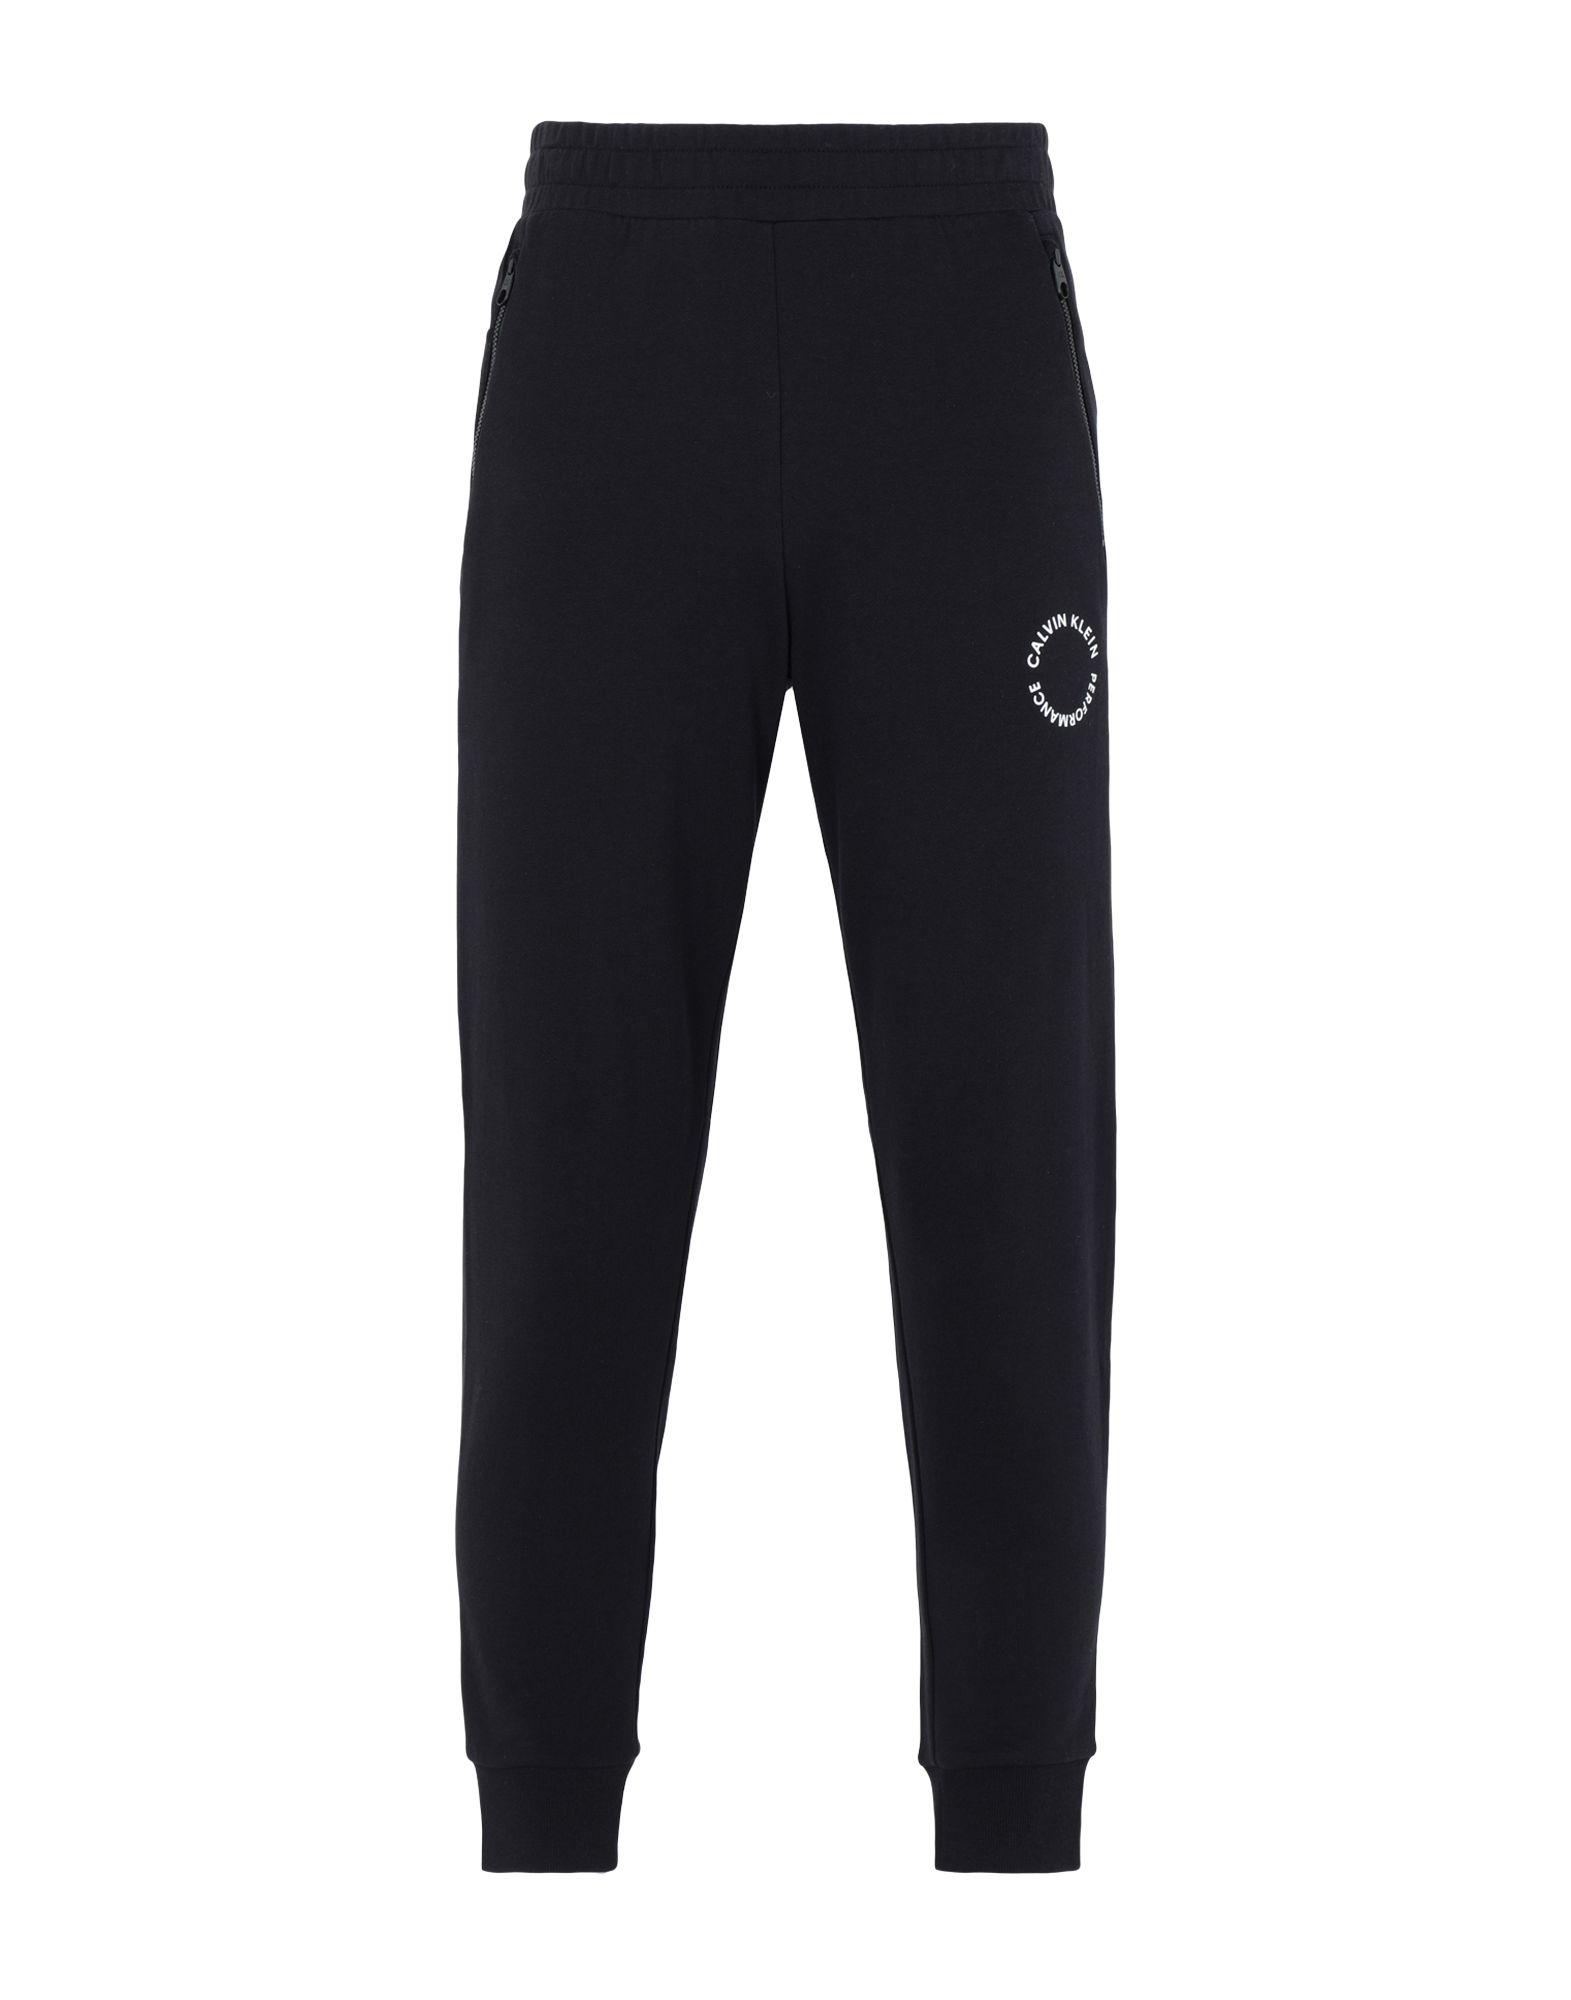 Calvin Klein Fleece Casual Pants in Black for Men - Lyst